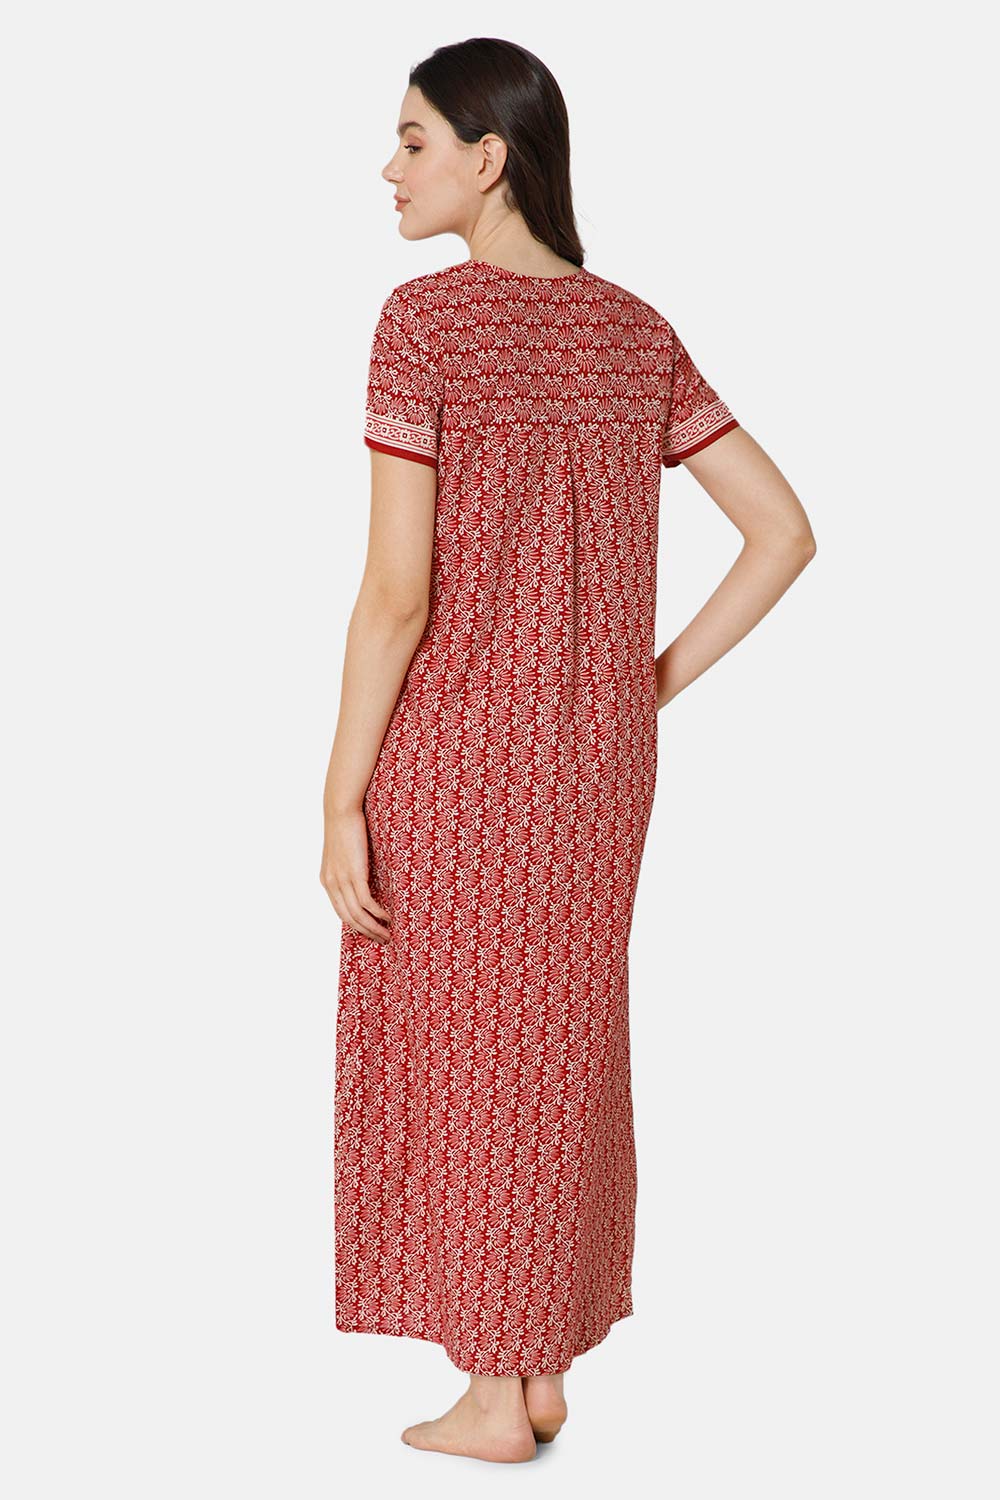 Naidu Hall Pleated Women's Nighty Full Length Half Sleeve  - Red - R134